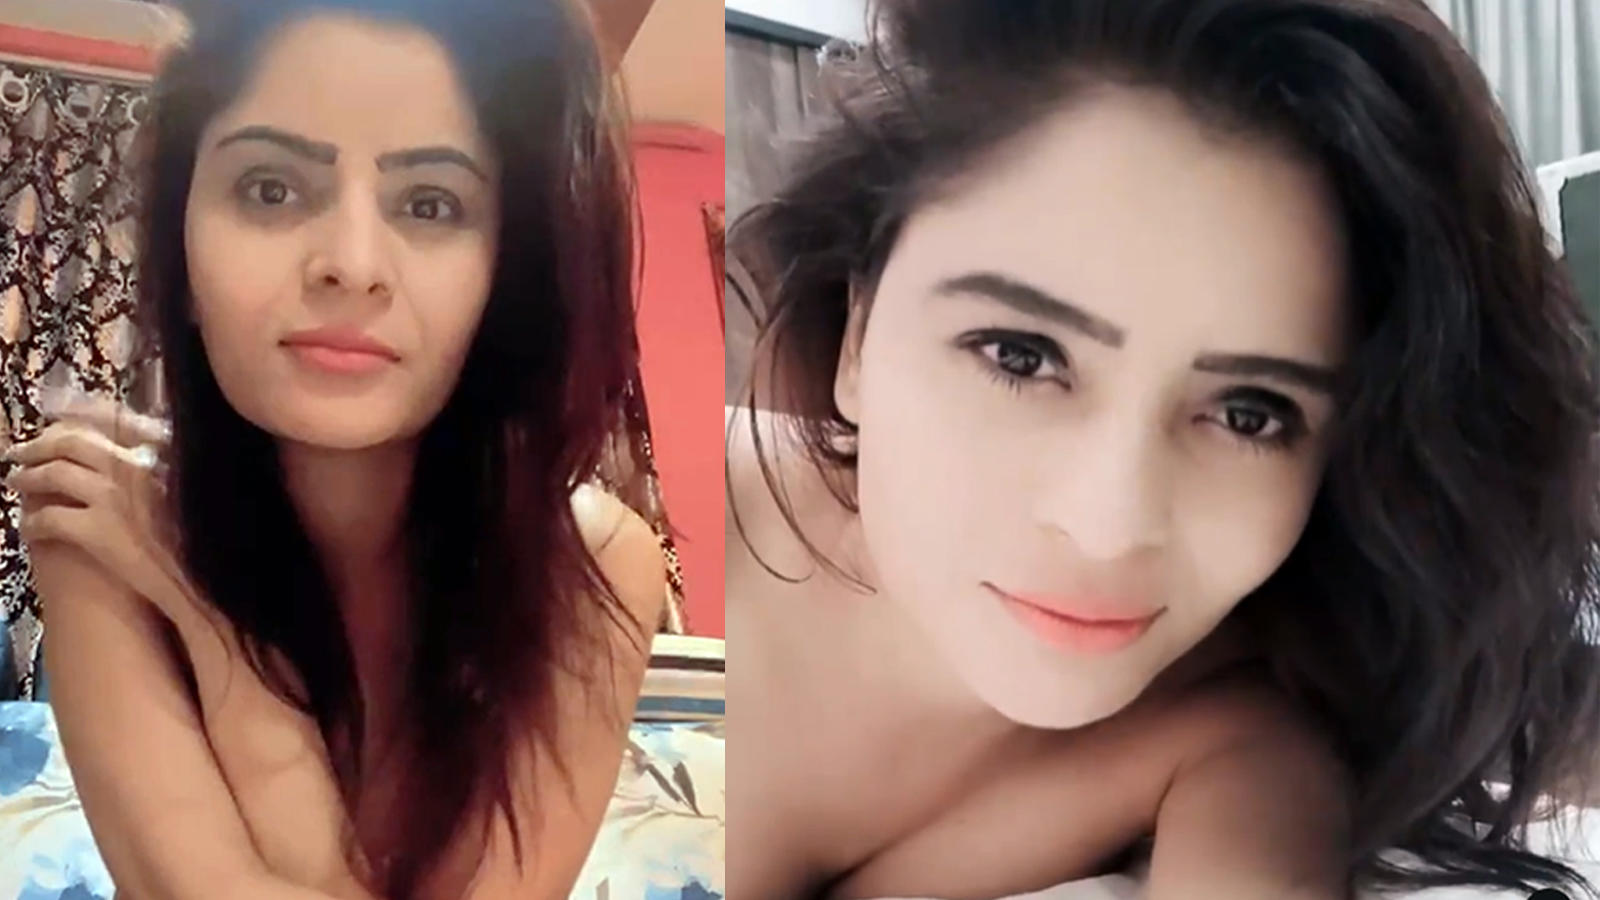 Raja Kumari Ki Sexi - Gehana Vasisth arrested for allegedly shooting and uploading porn videos on  a website | TV - Times of India Videos